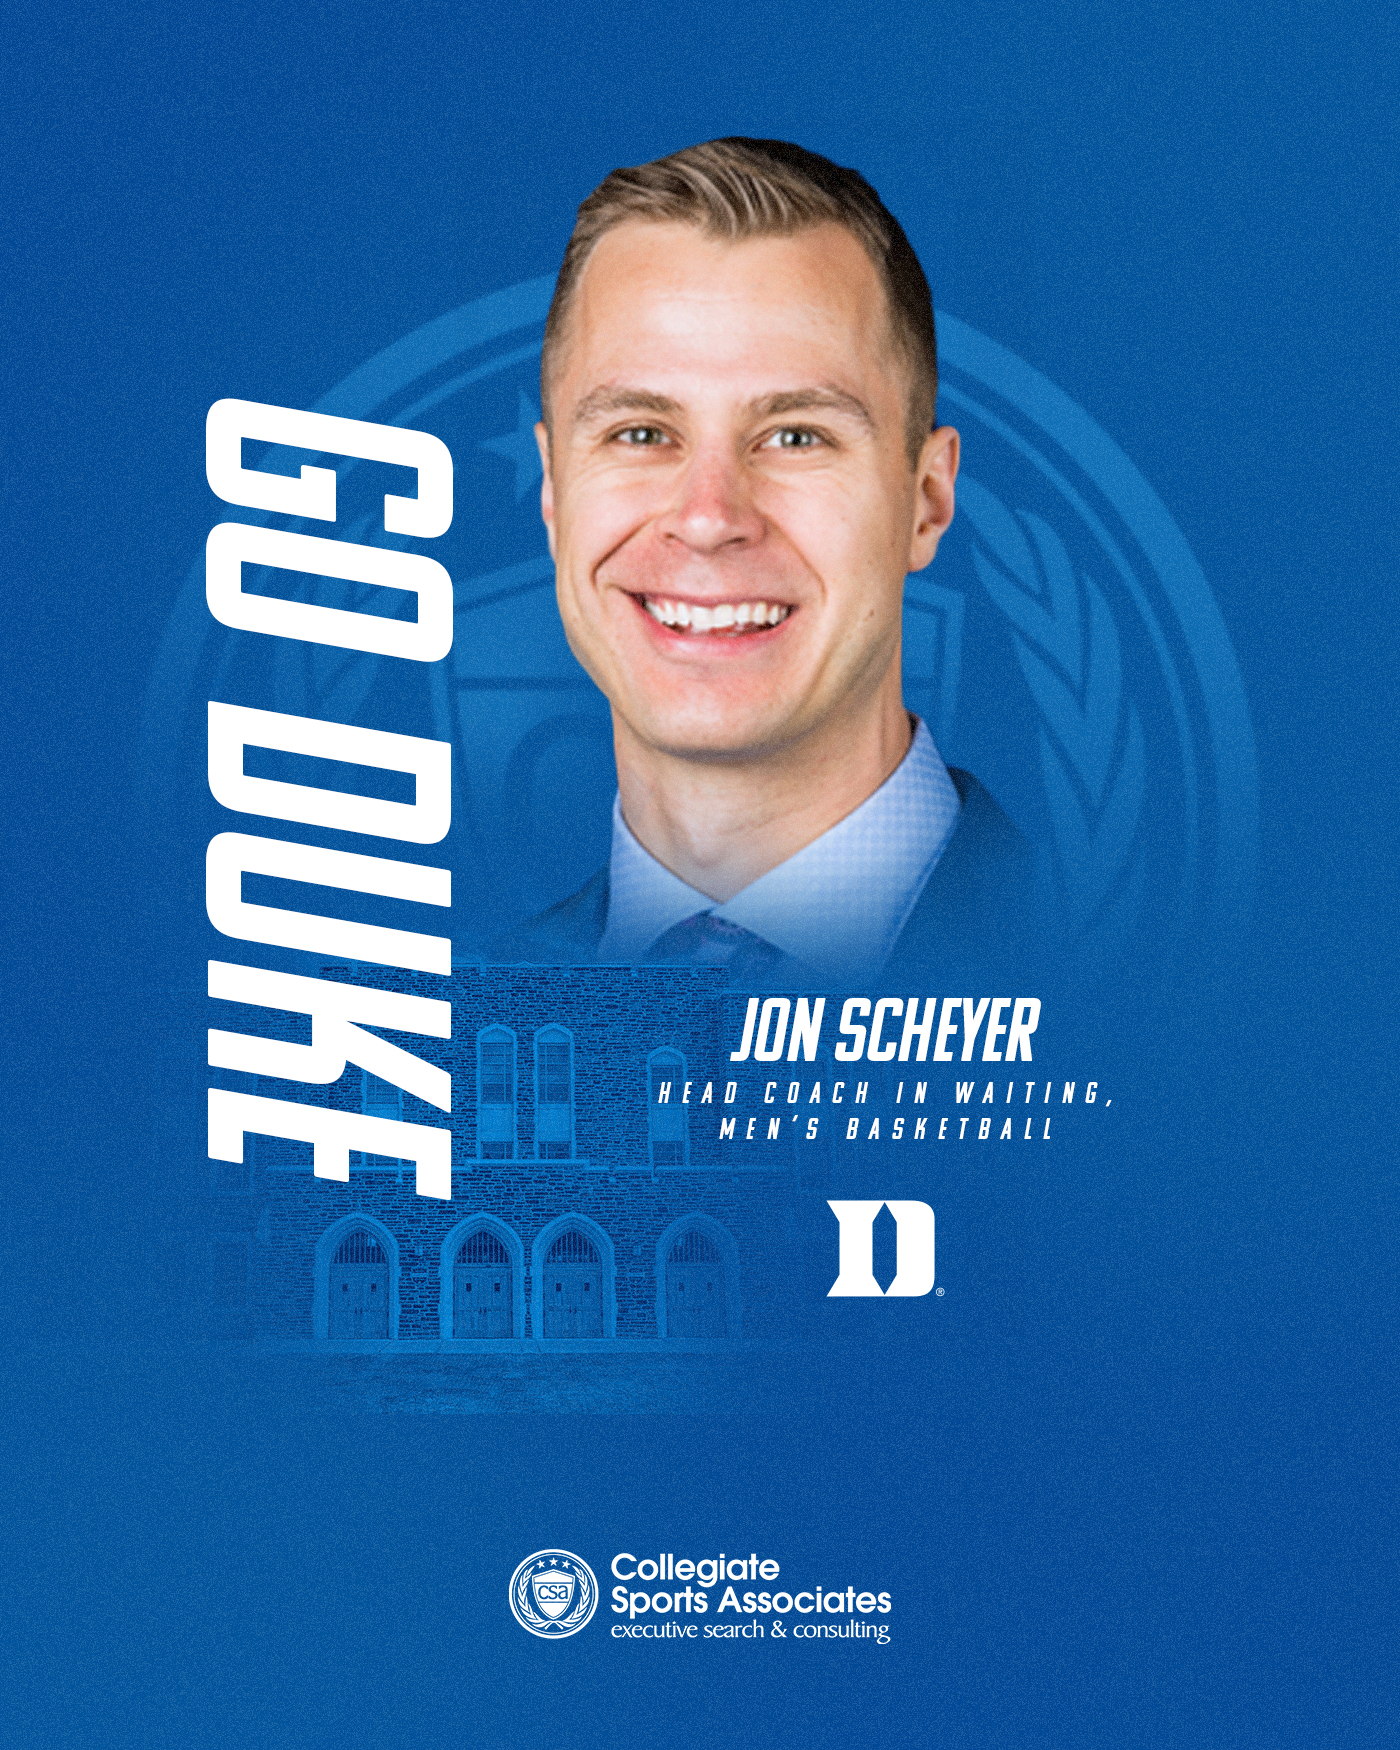 Jon Scheyer to Succeed Coach K at Duke - Collegiate Sports Associates